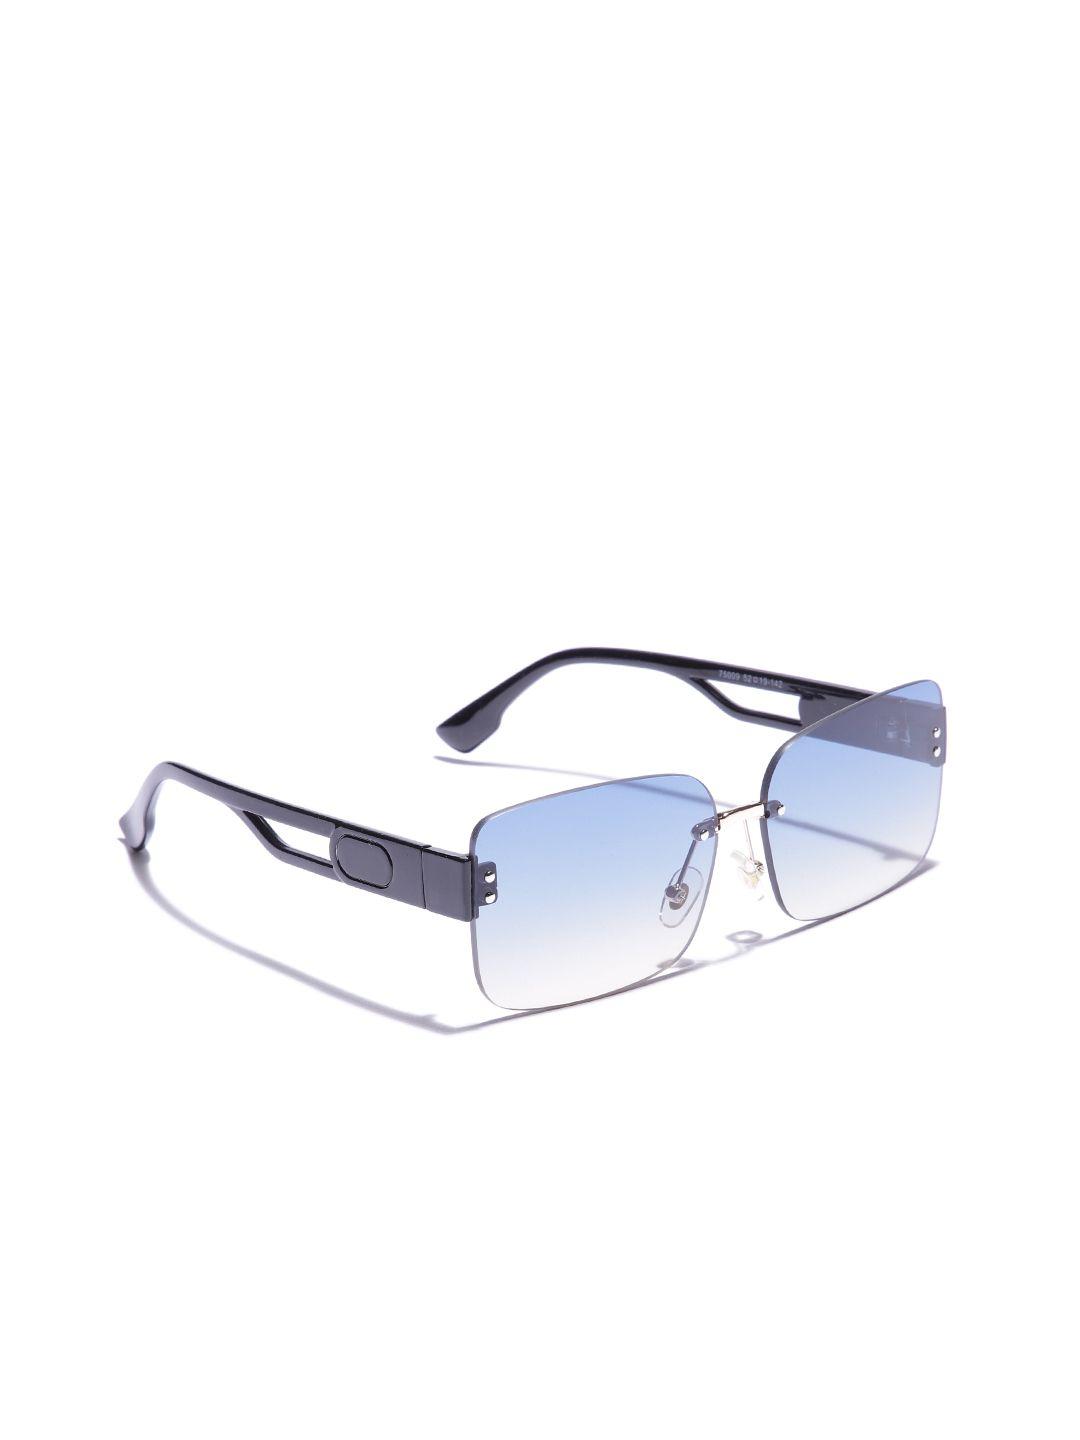 carlton london unisex blue lens & black rectangle sunglasses with uv protected lens